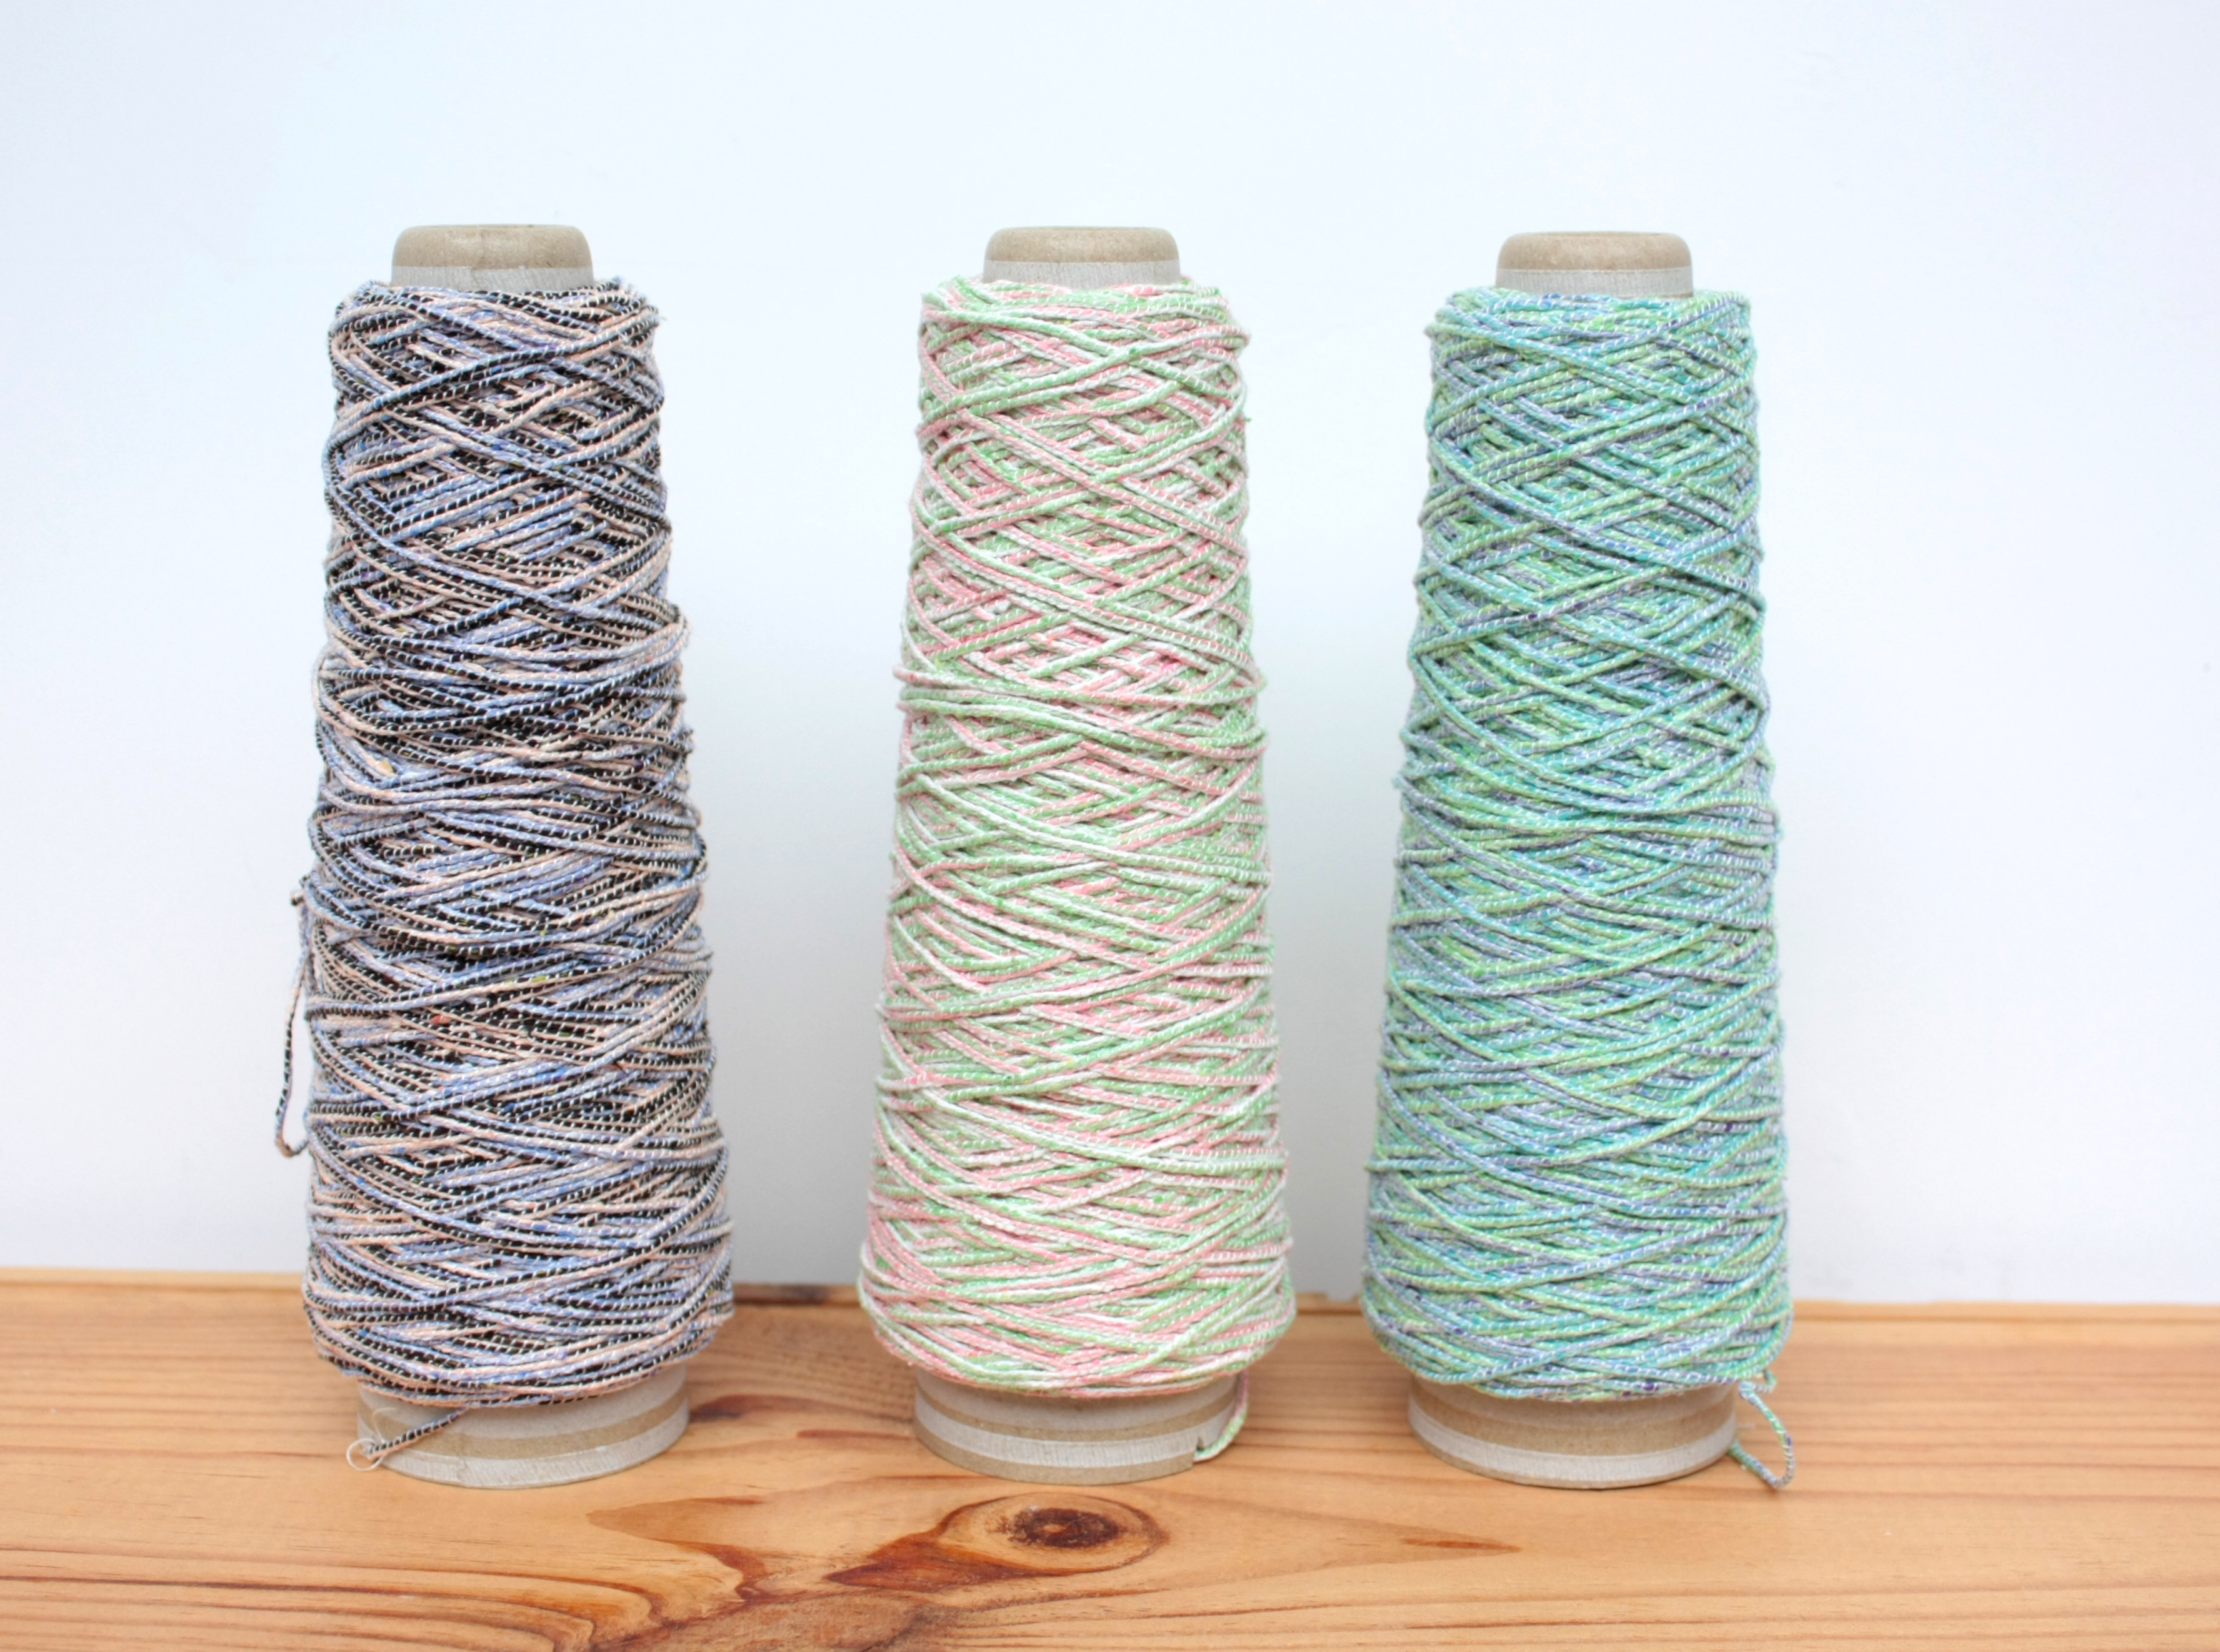 〈NEWS〉店頭SALEはシルクや生成、編み針も。 | AVRIL blog